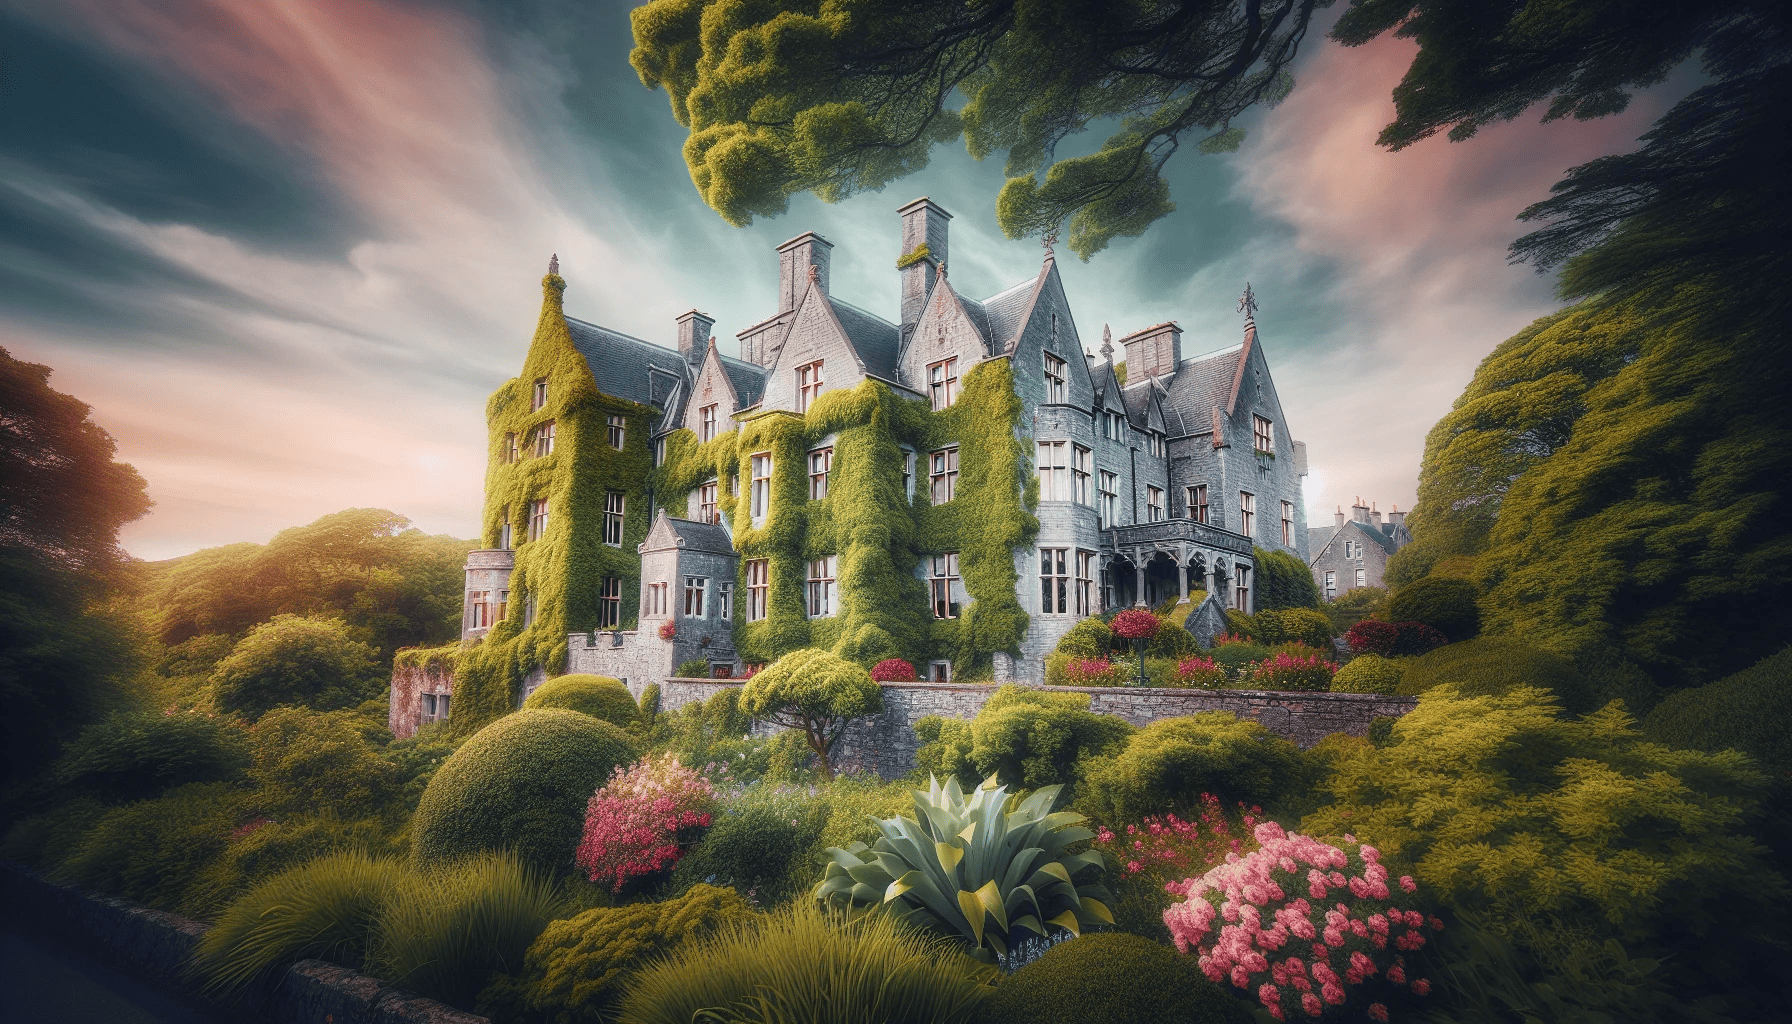 Charming Irish castle hotel